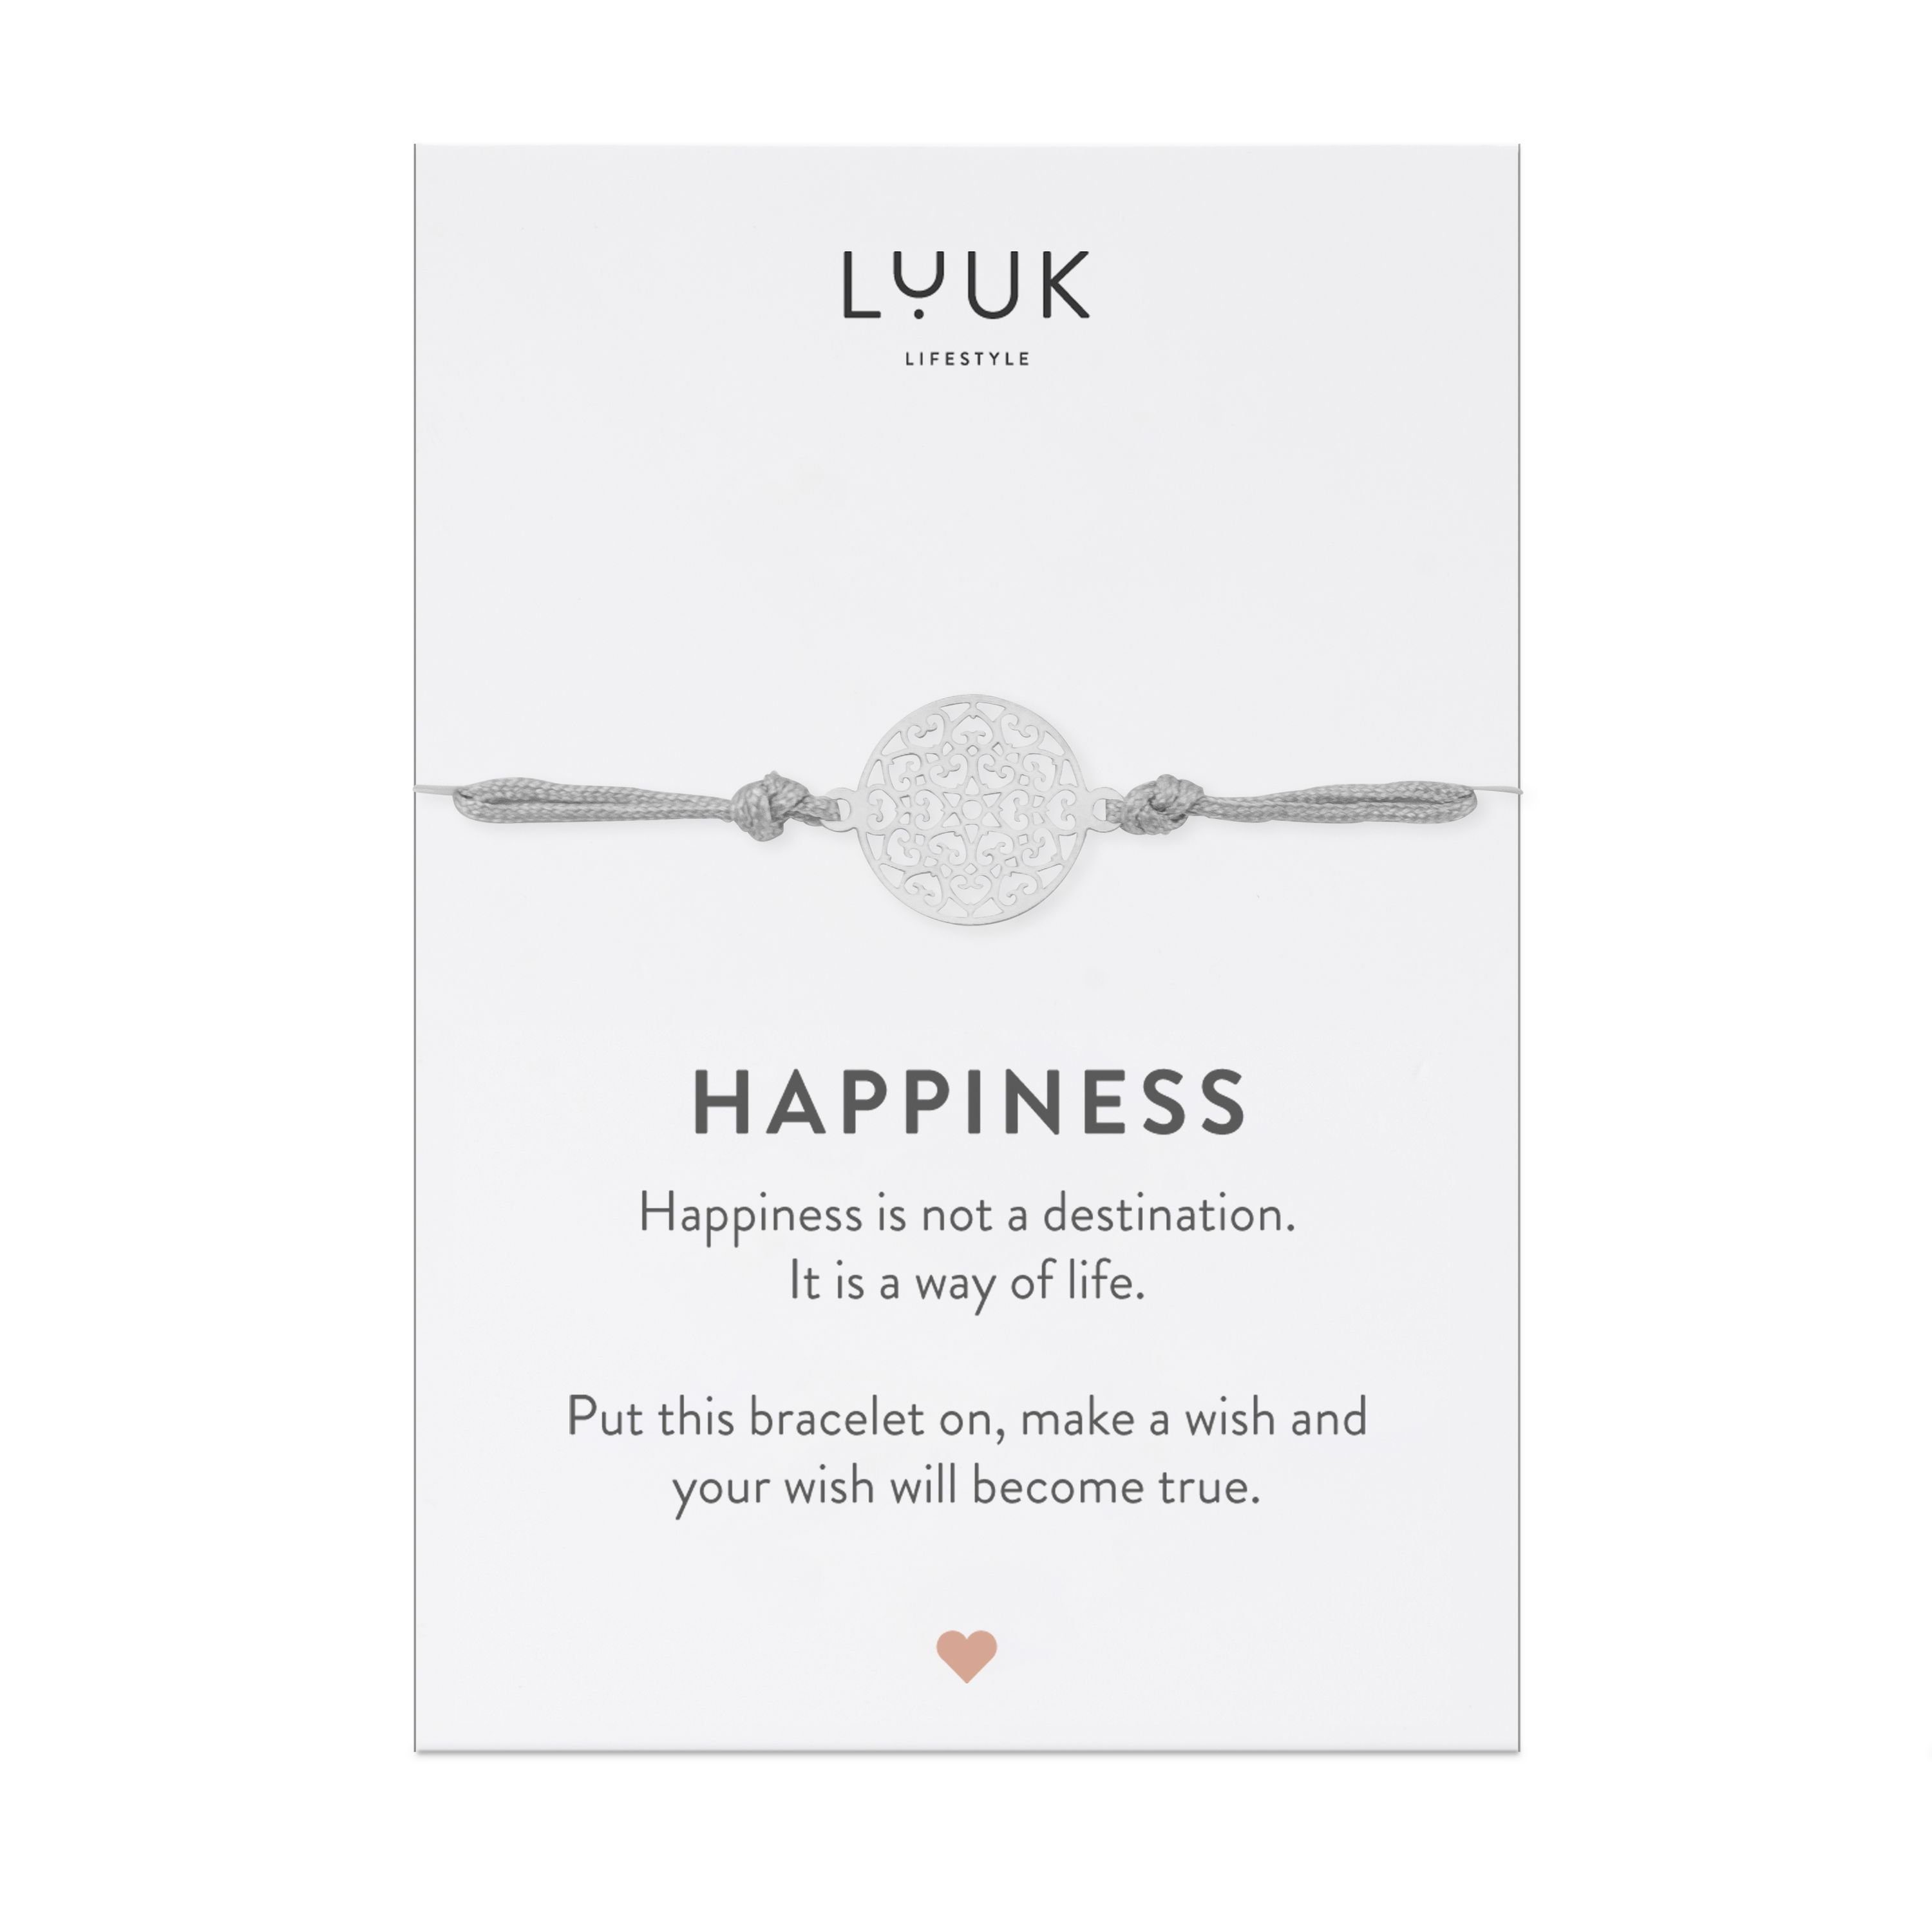 LUUK LIFESTYLE Freundschaftsarmband Lebensblume, handmade, mit Happiness Spruchkarte